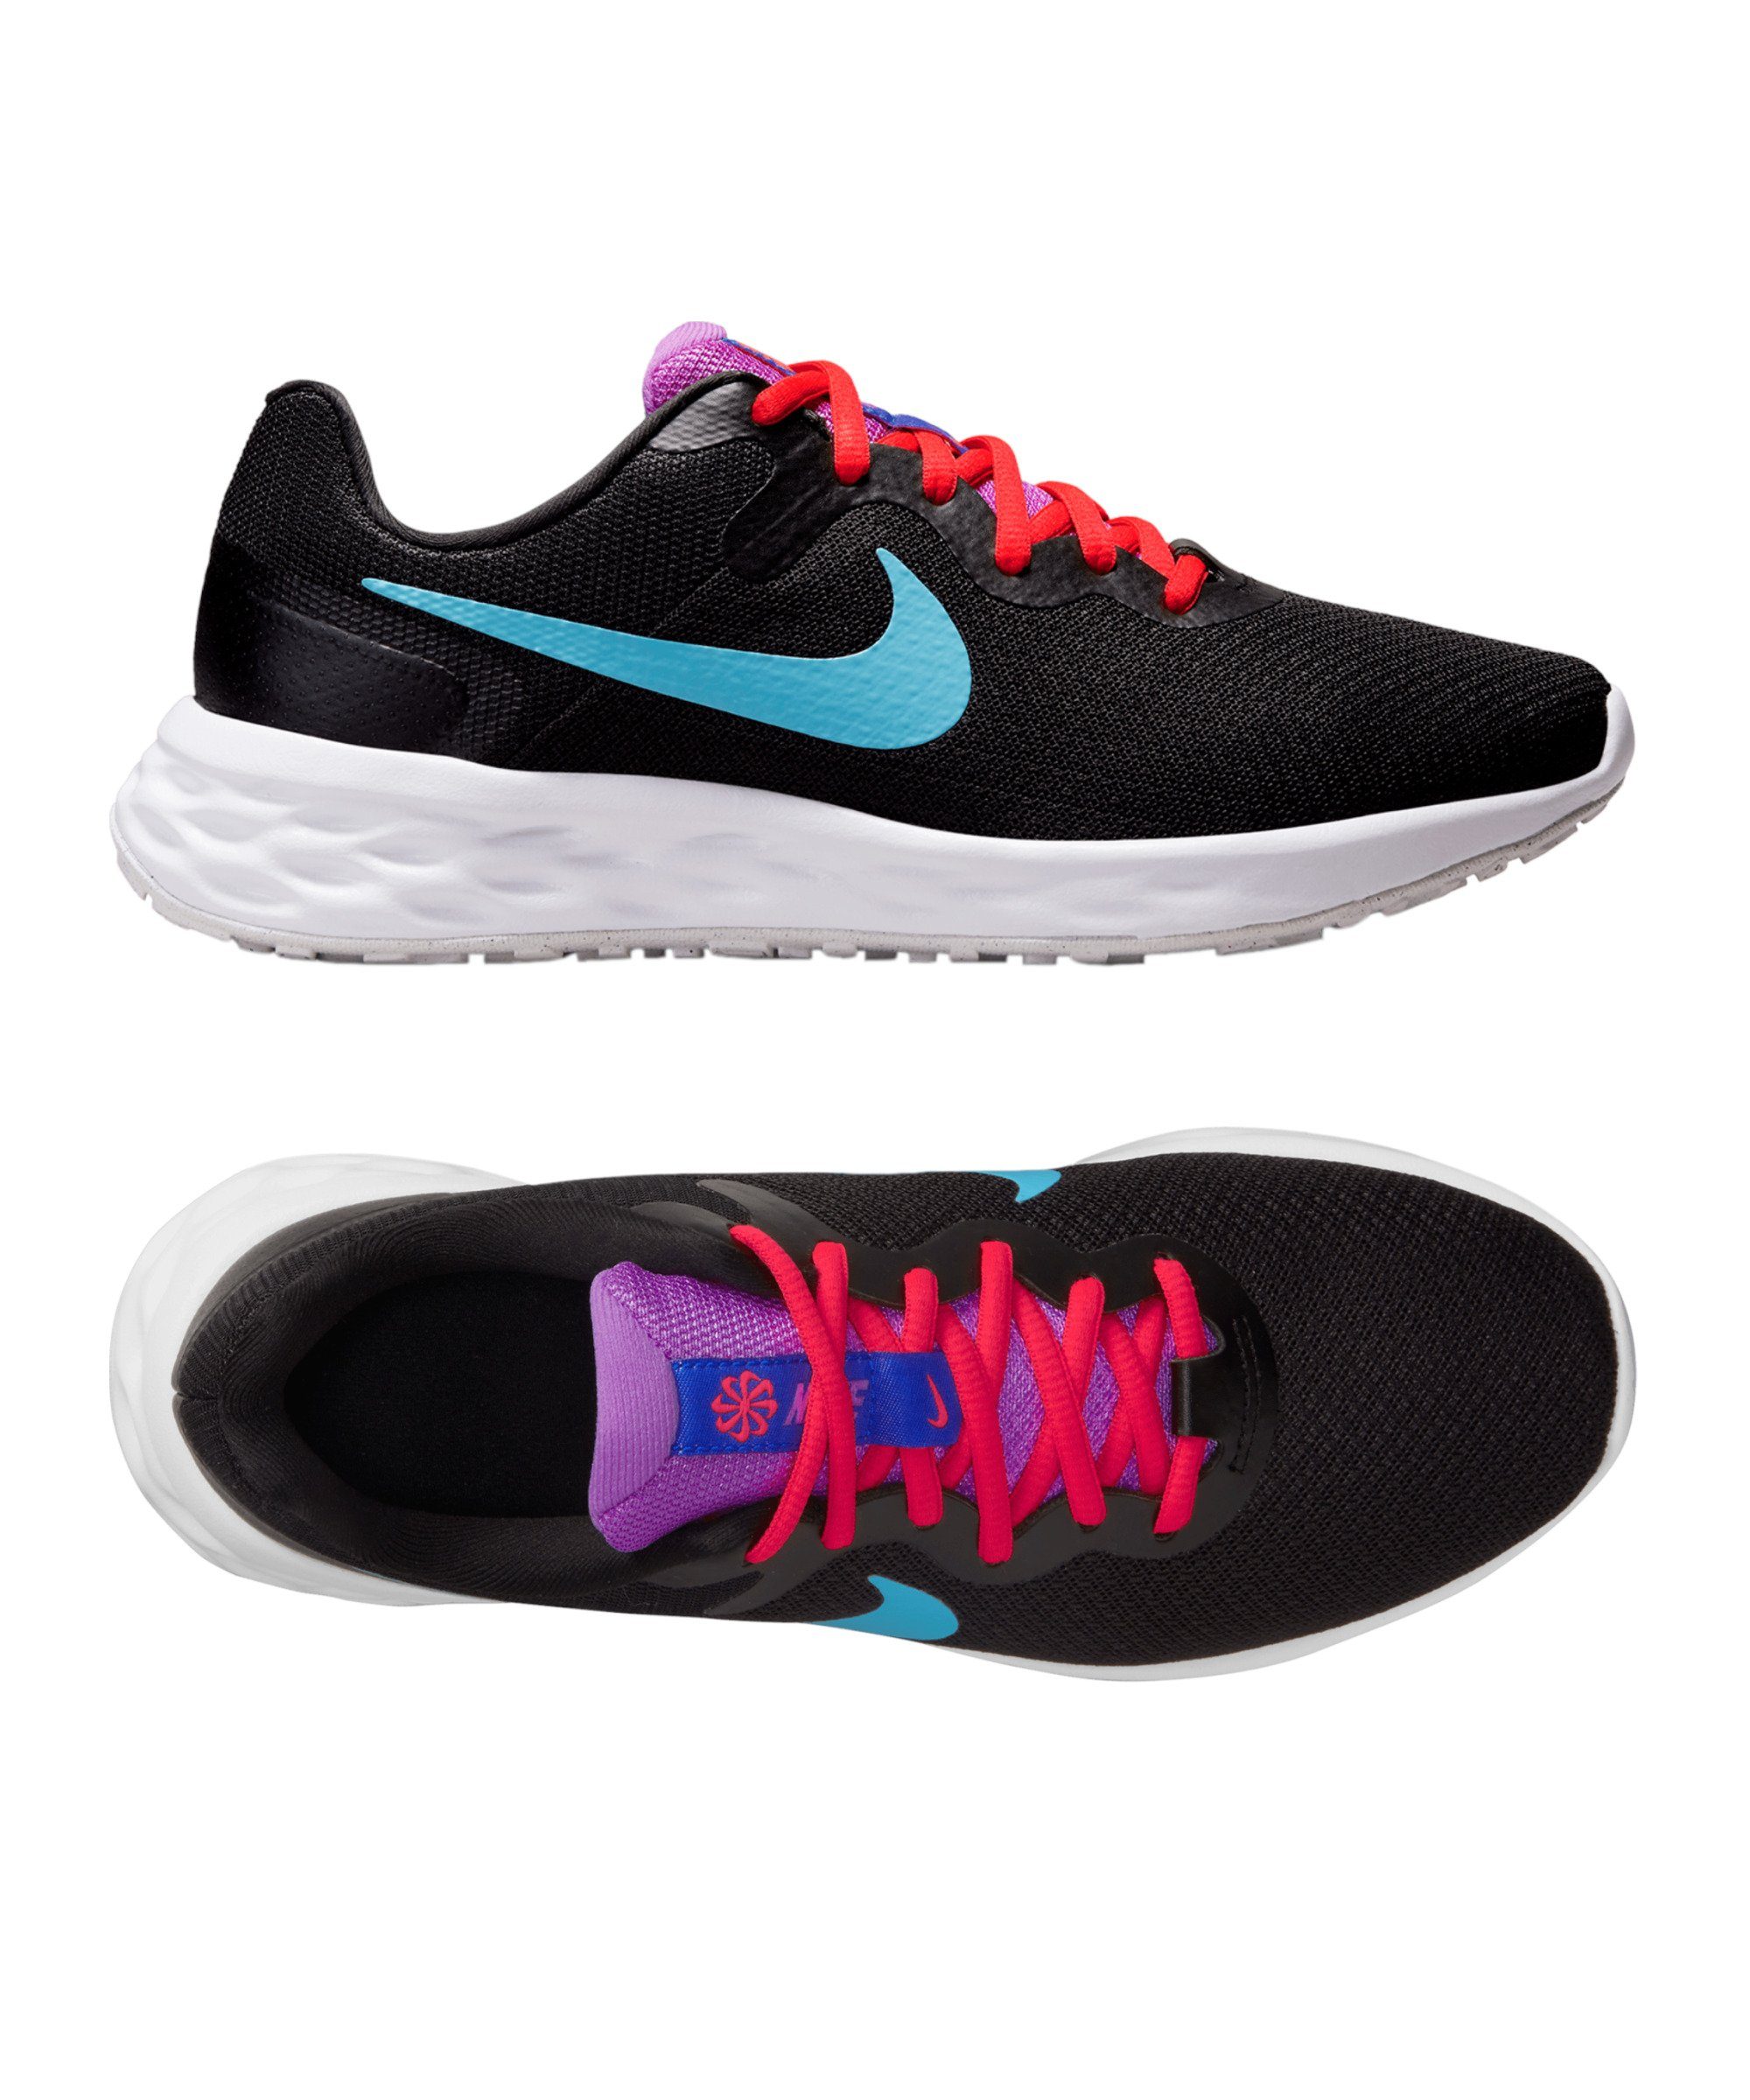 Damen Nike Laufschuh Laufschuh schwarzblaurot F011 Revolution 6